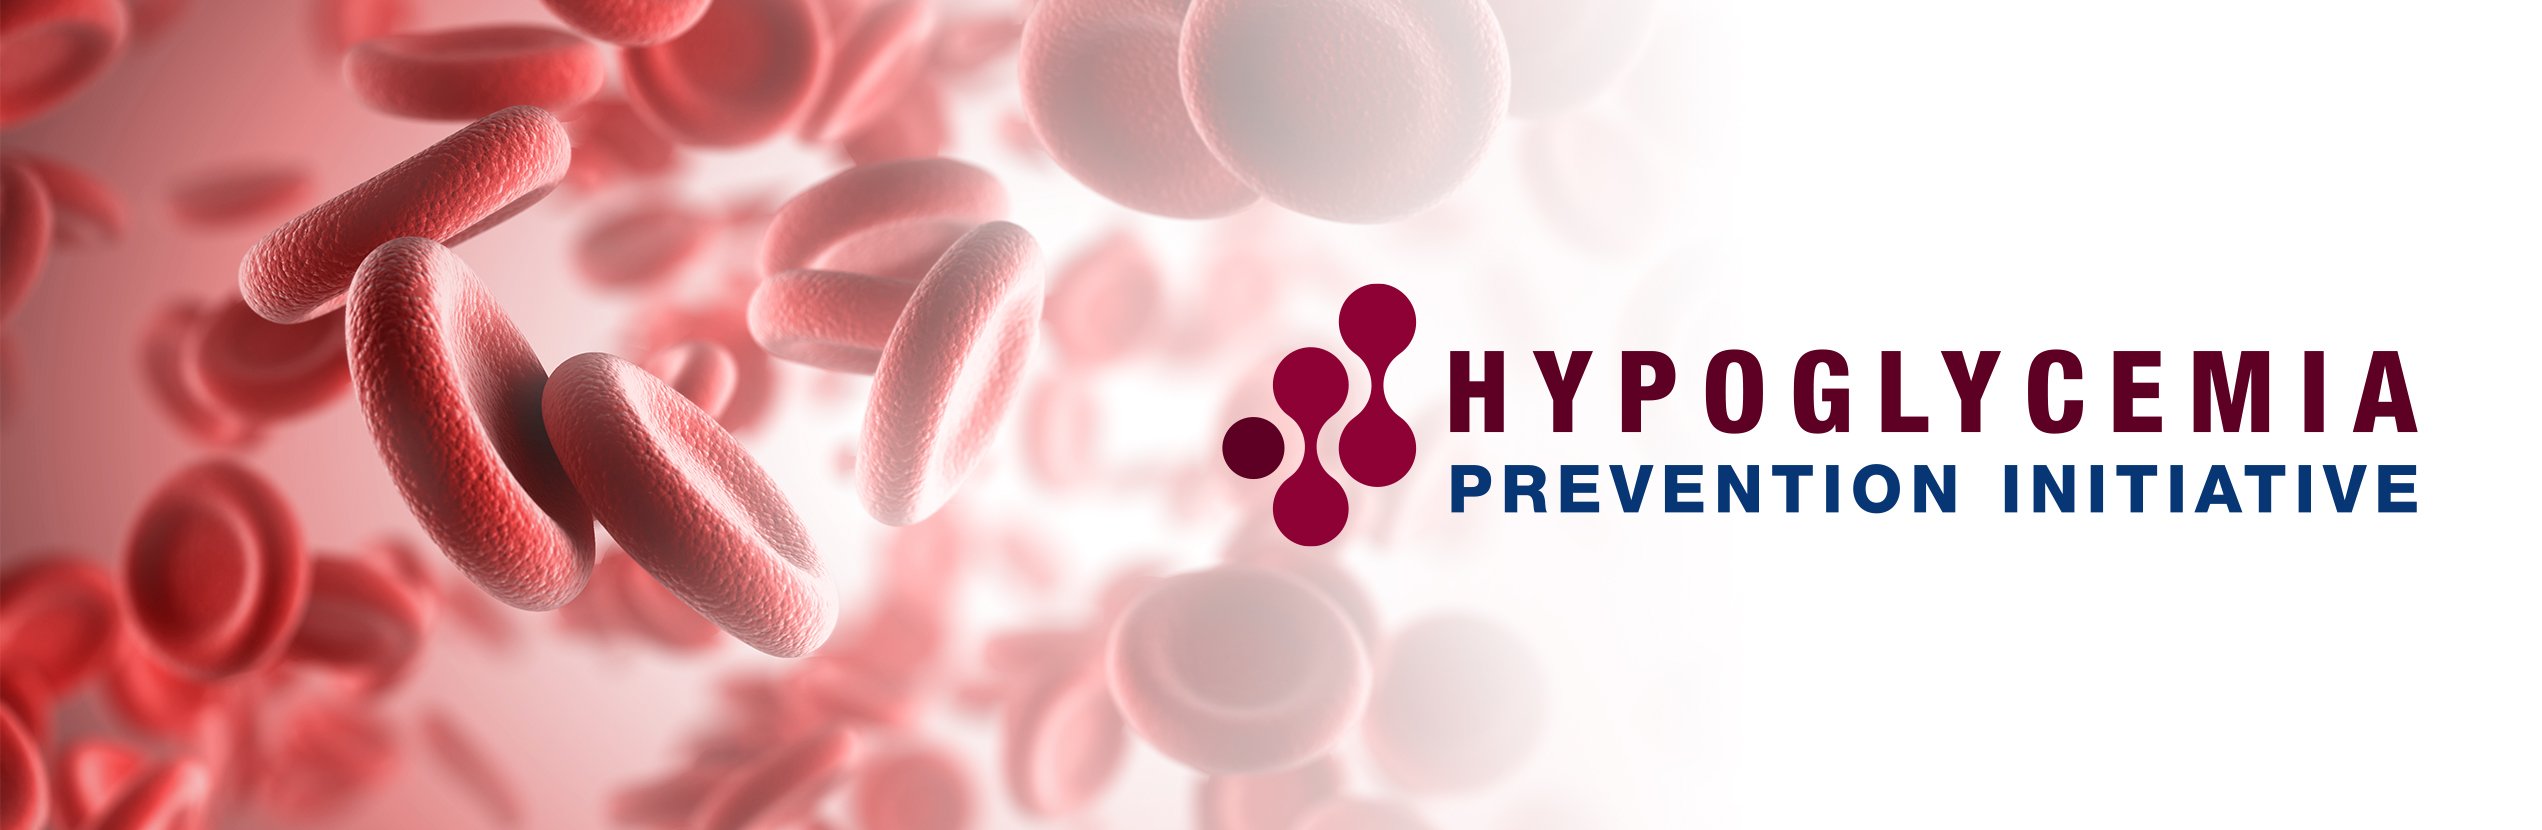 Hypoglycemia prevention